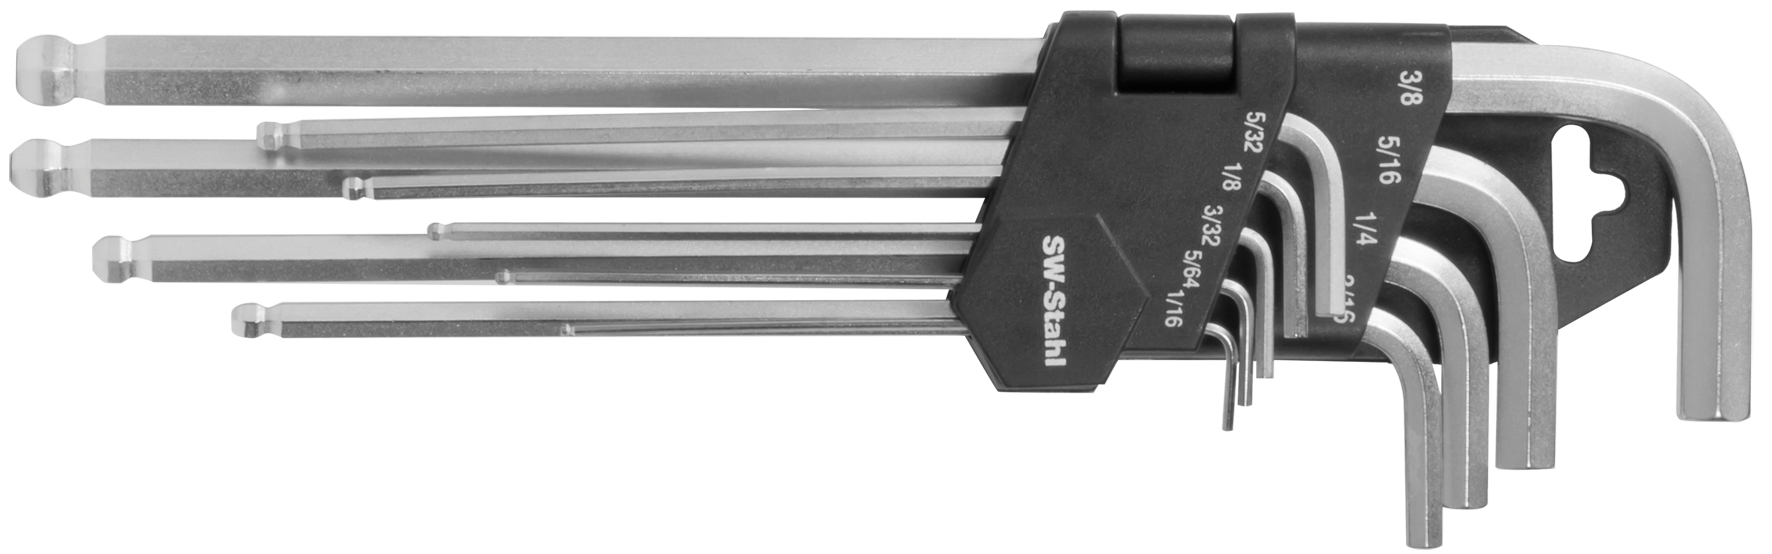 SWSTAHL Allen key set, 1/16 inch - 3/8 inch S21-205